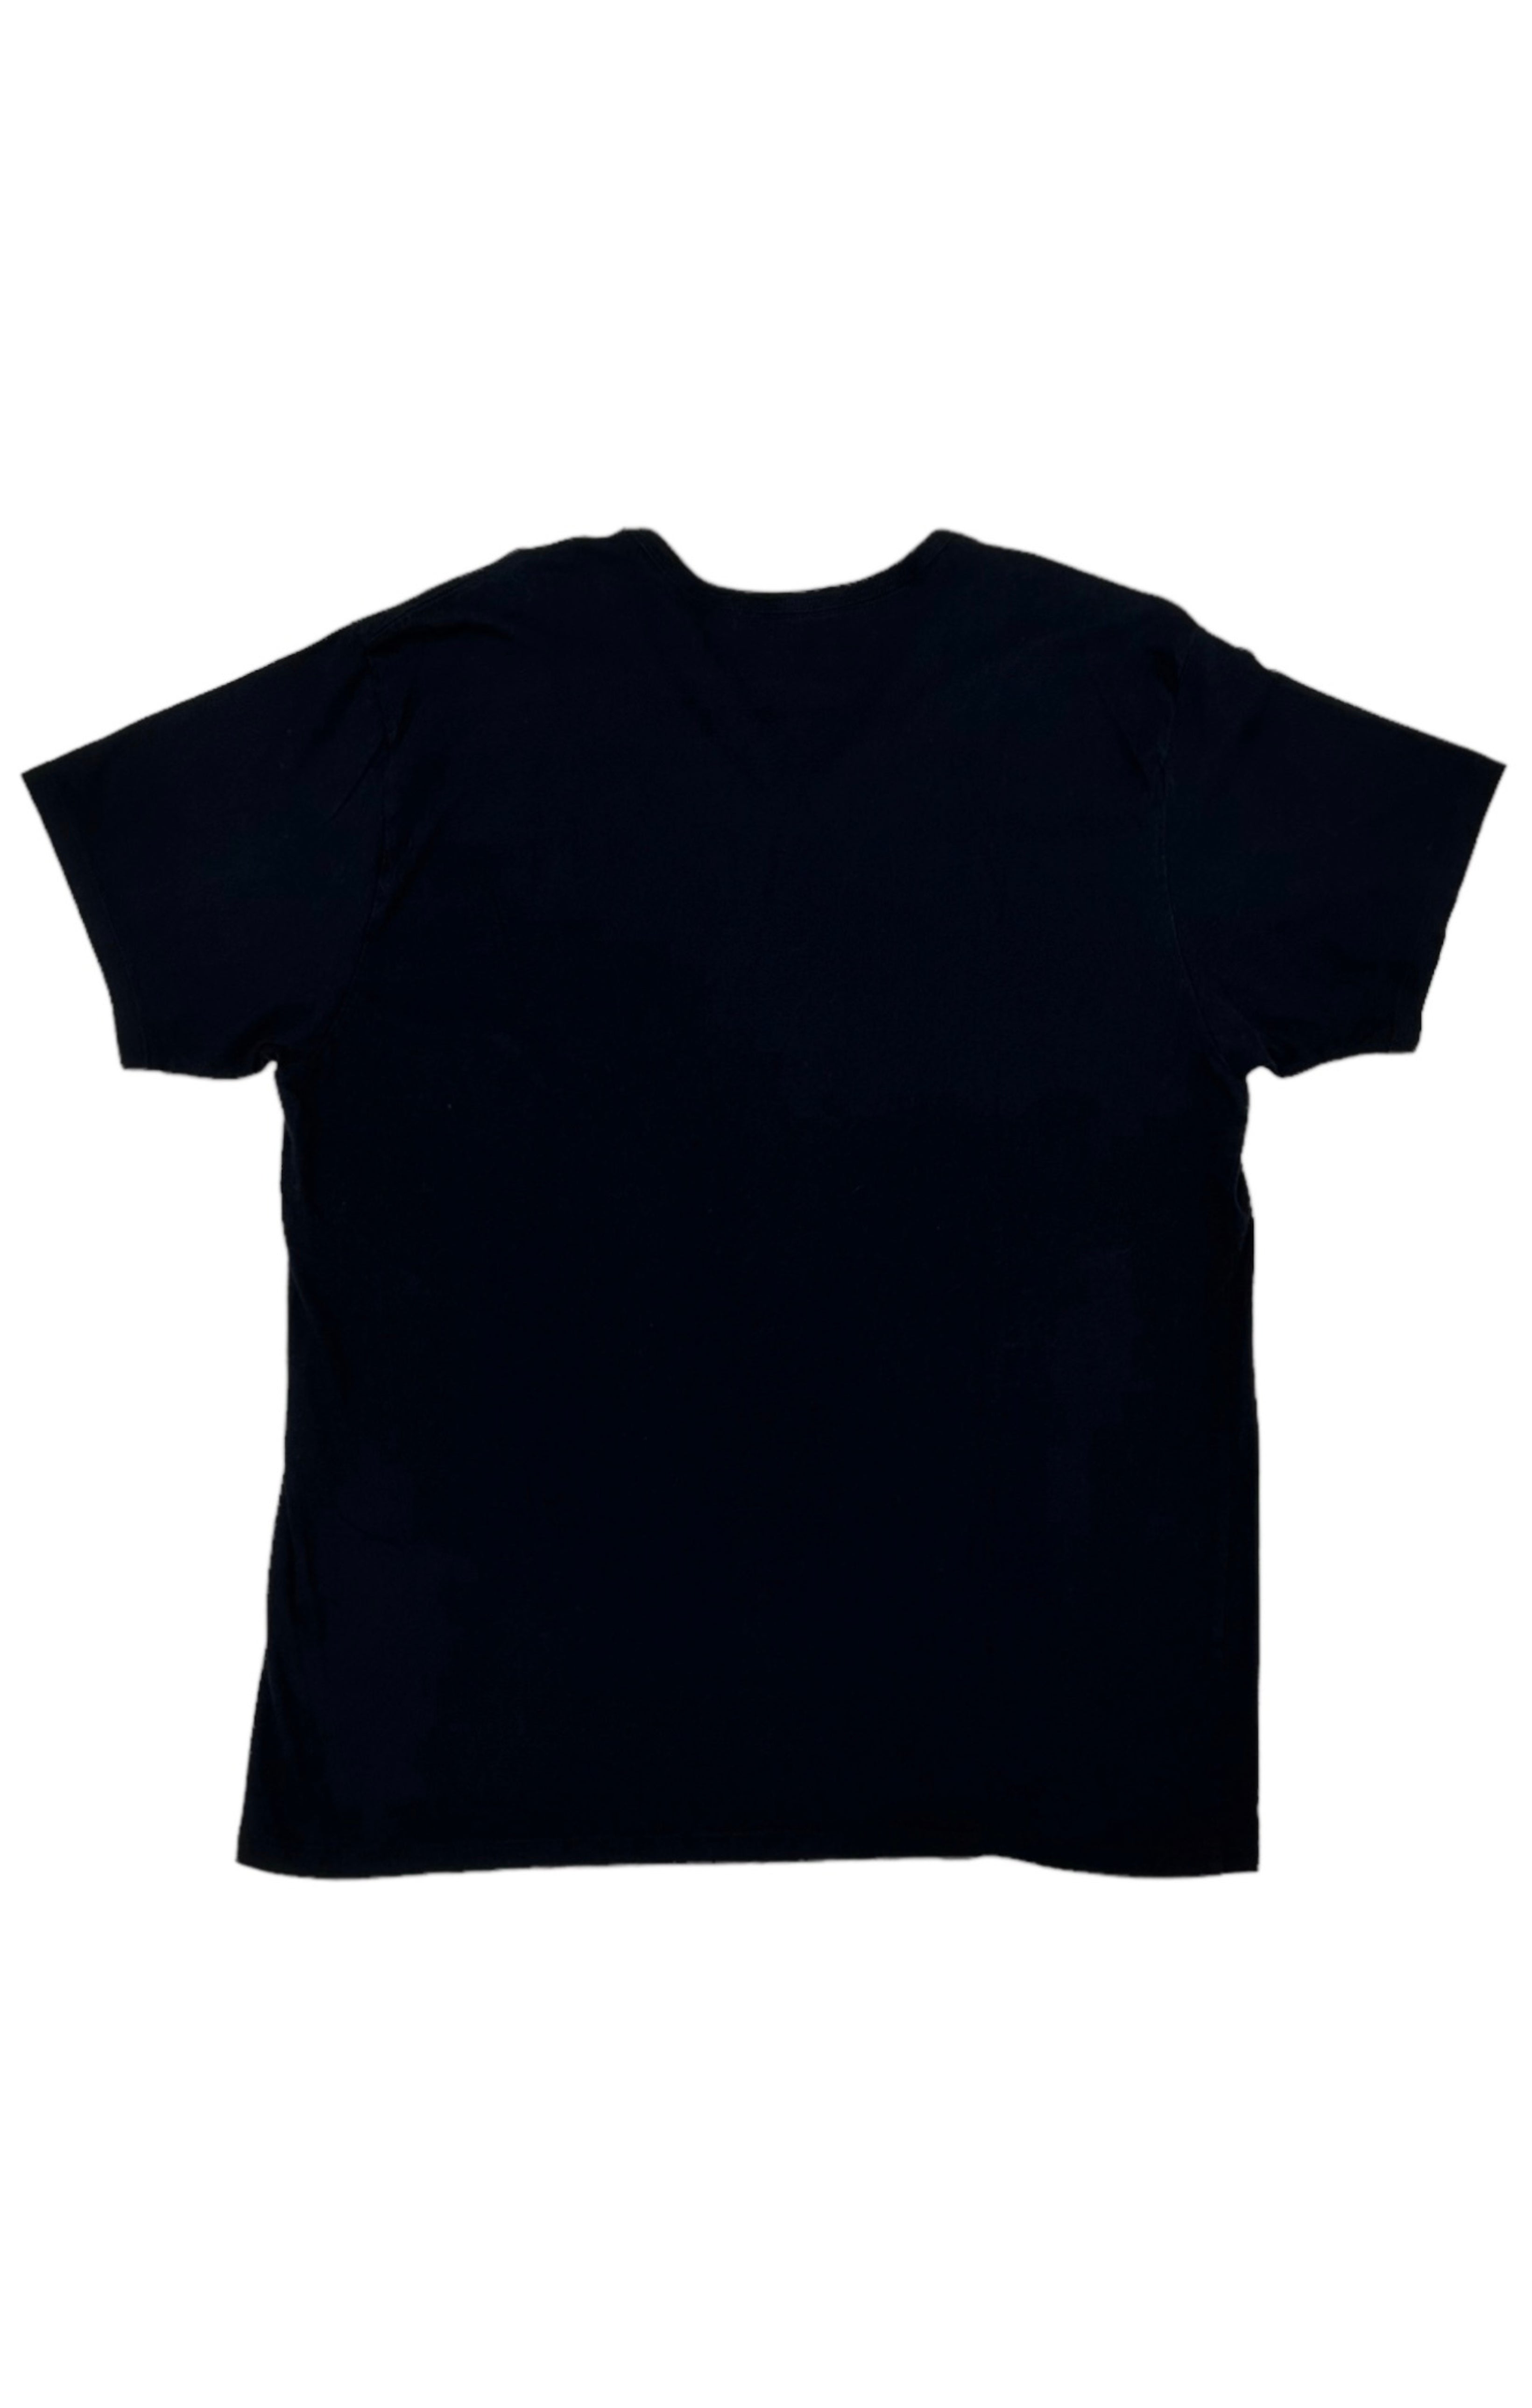 CALVIN KLEIN T-shirt Size: XL